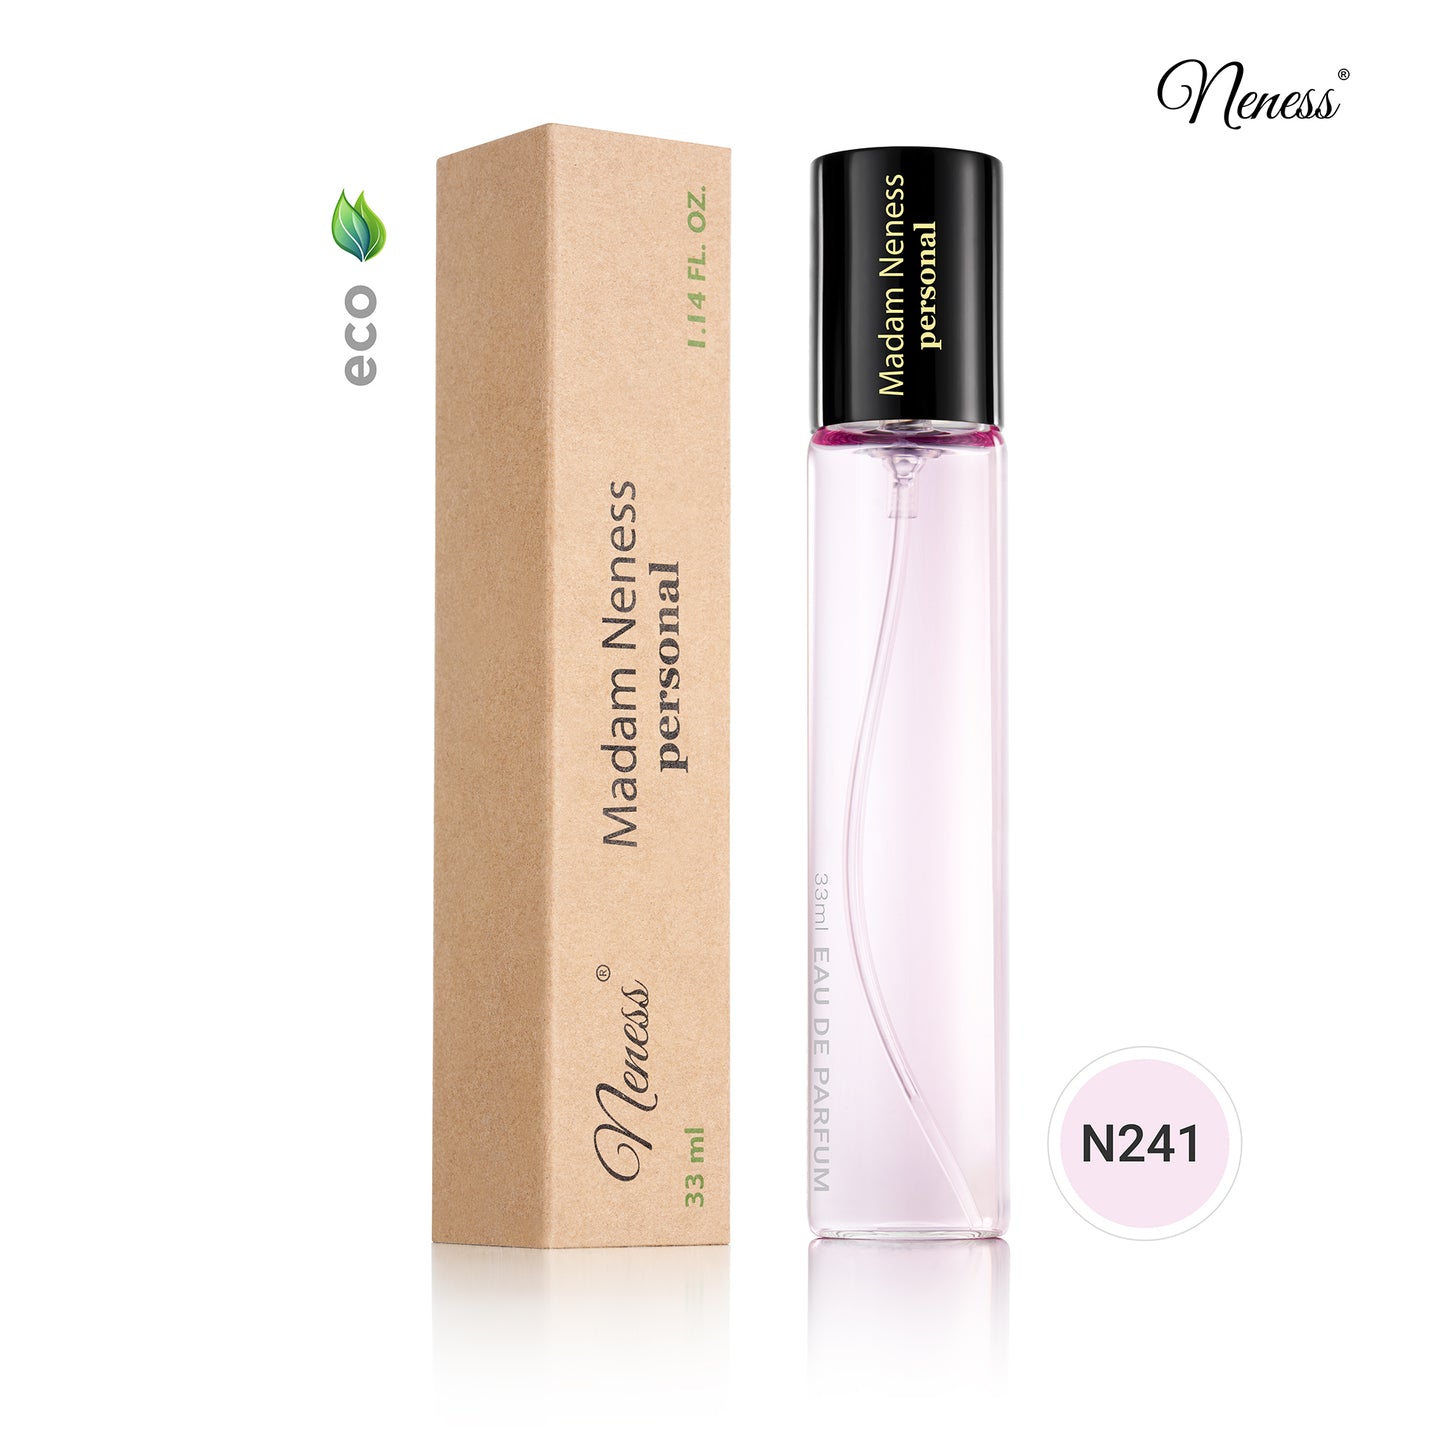 N241. Neness Madam Neness Personal - 33 ml - Perfume For Women